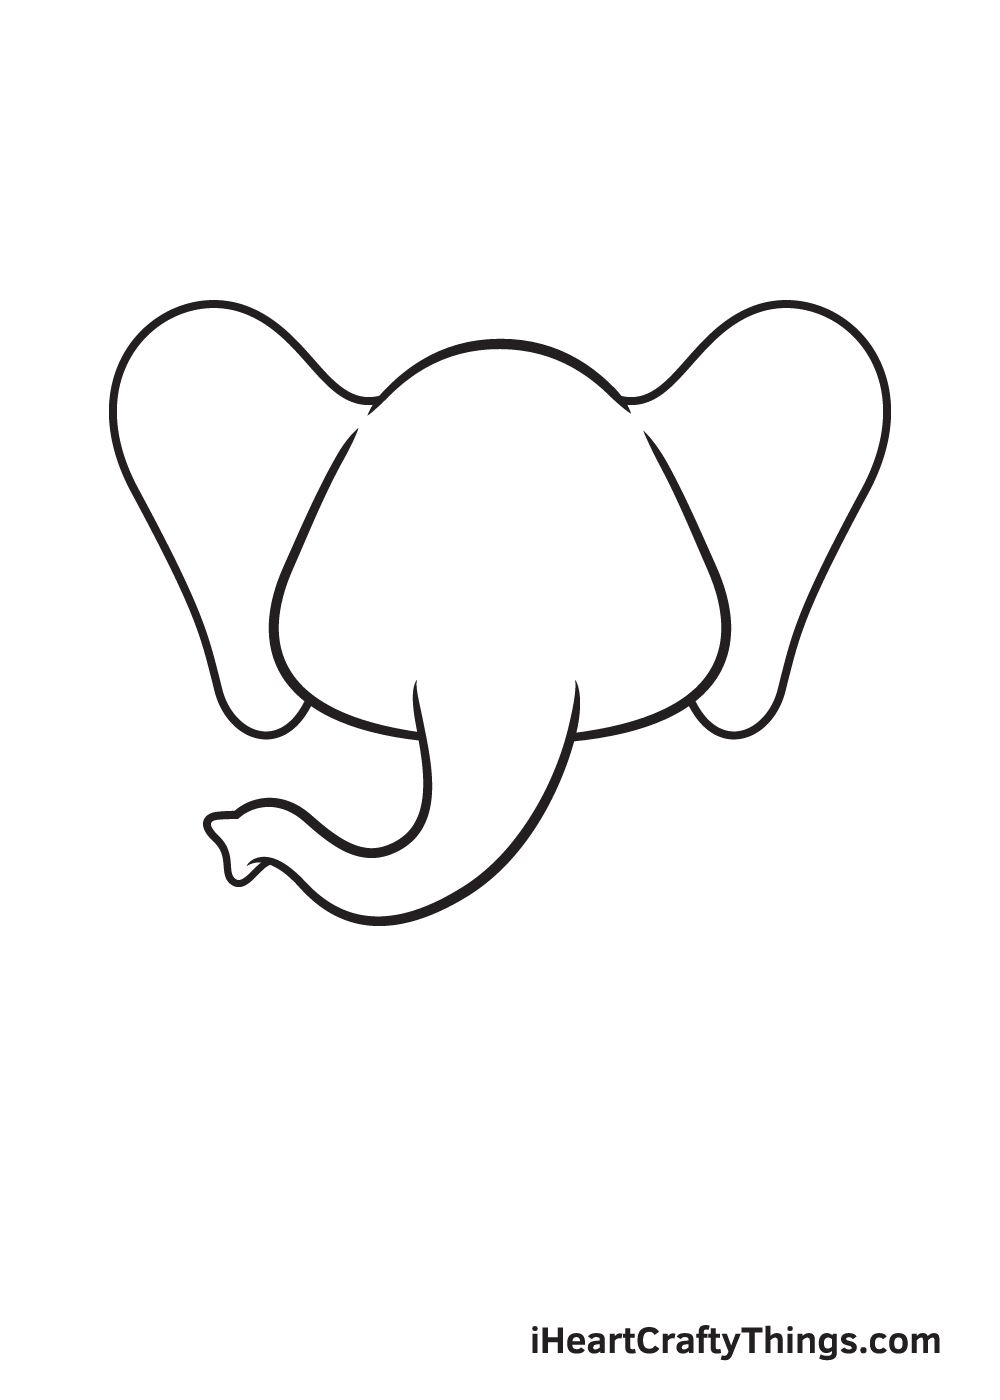 Vẽ con voi - Bước 3